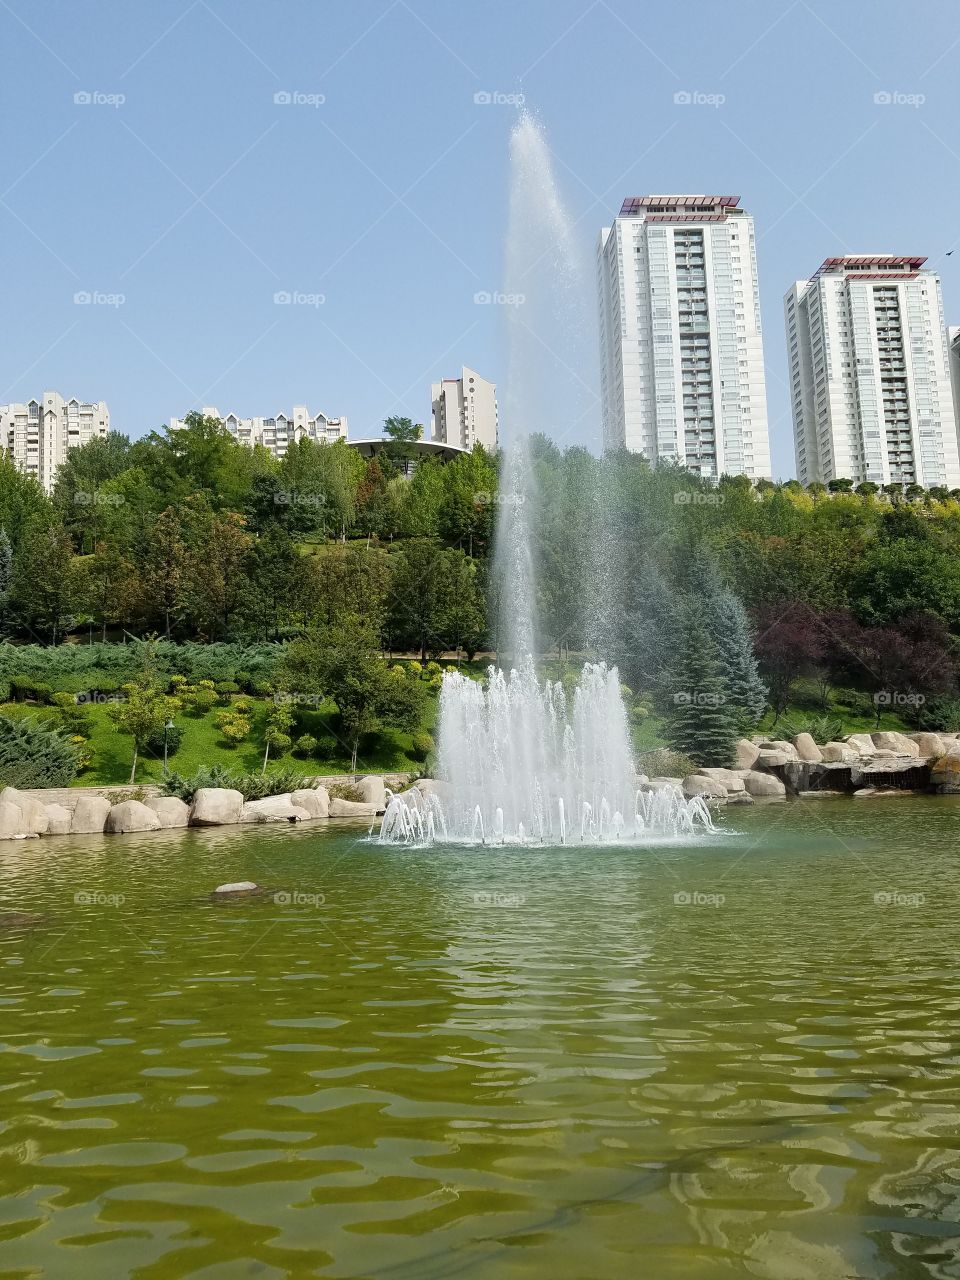 a water fountain in the dikman vadesi park in Ankara Turkey